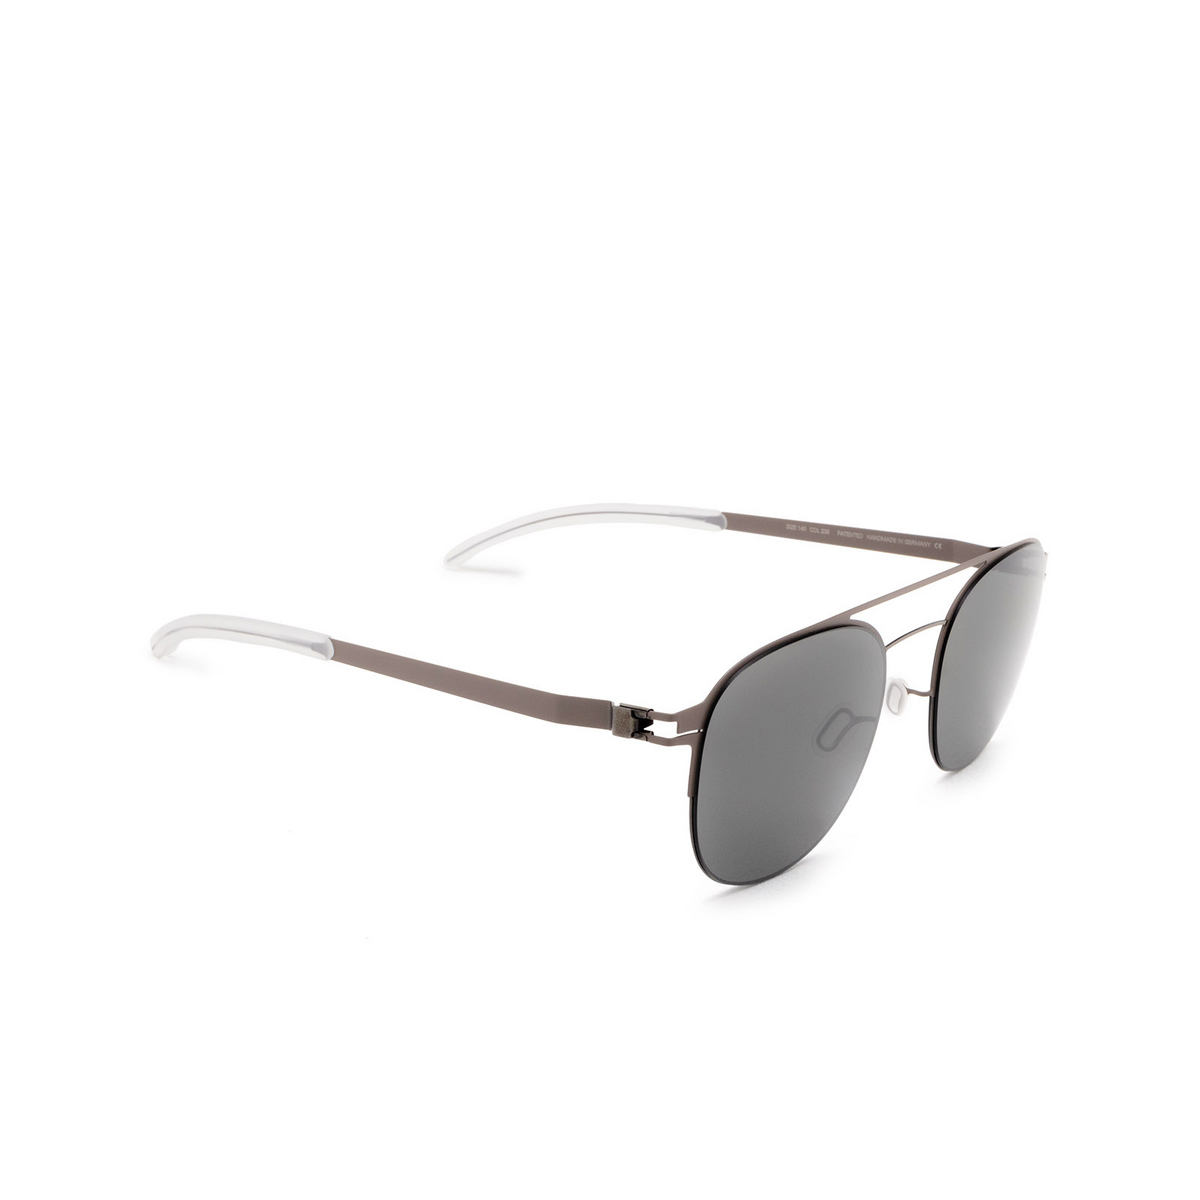 Mykita PARK Sunglasses 235 Shiny Graphite/Mole Grey - three-quarters view